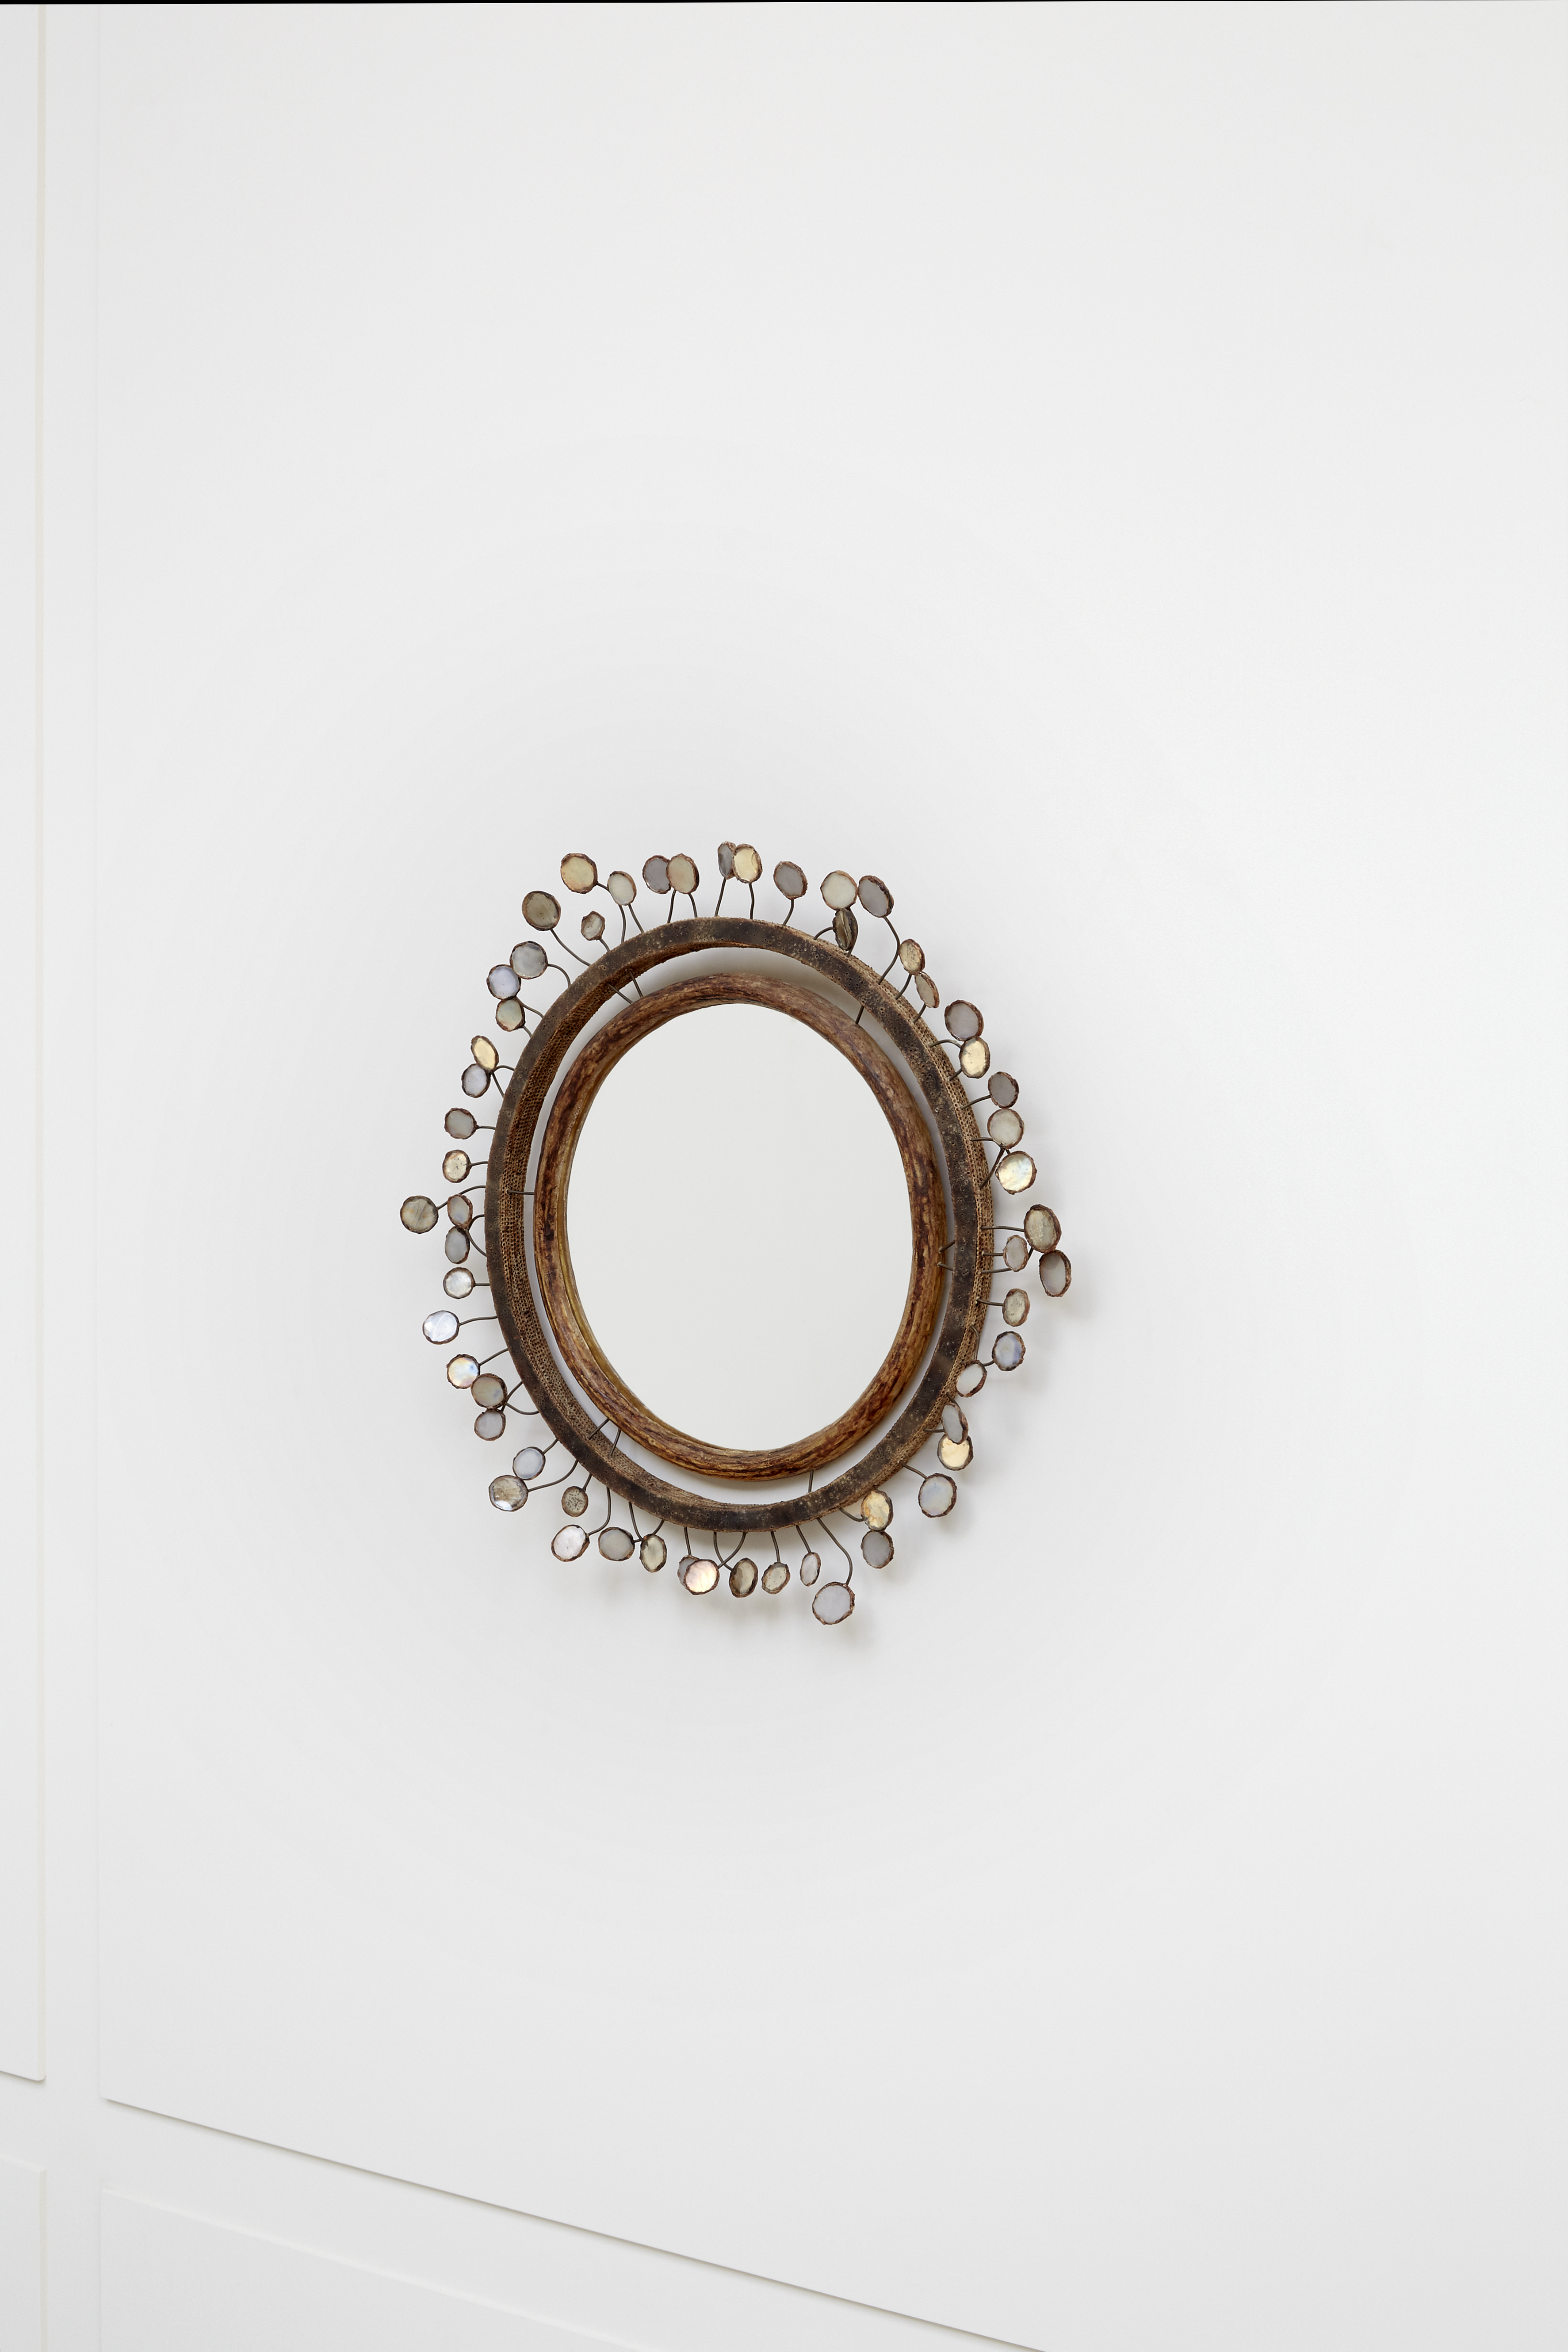 Line Vautrin, Rare “Sequins” mirror, vue 02